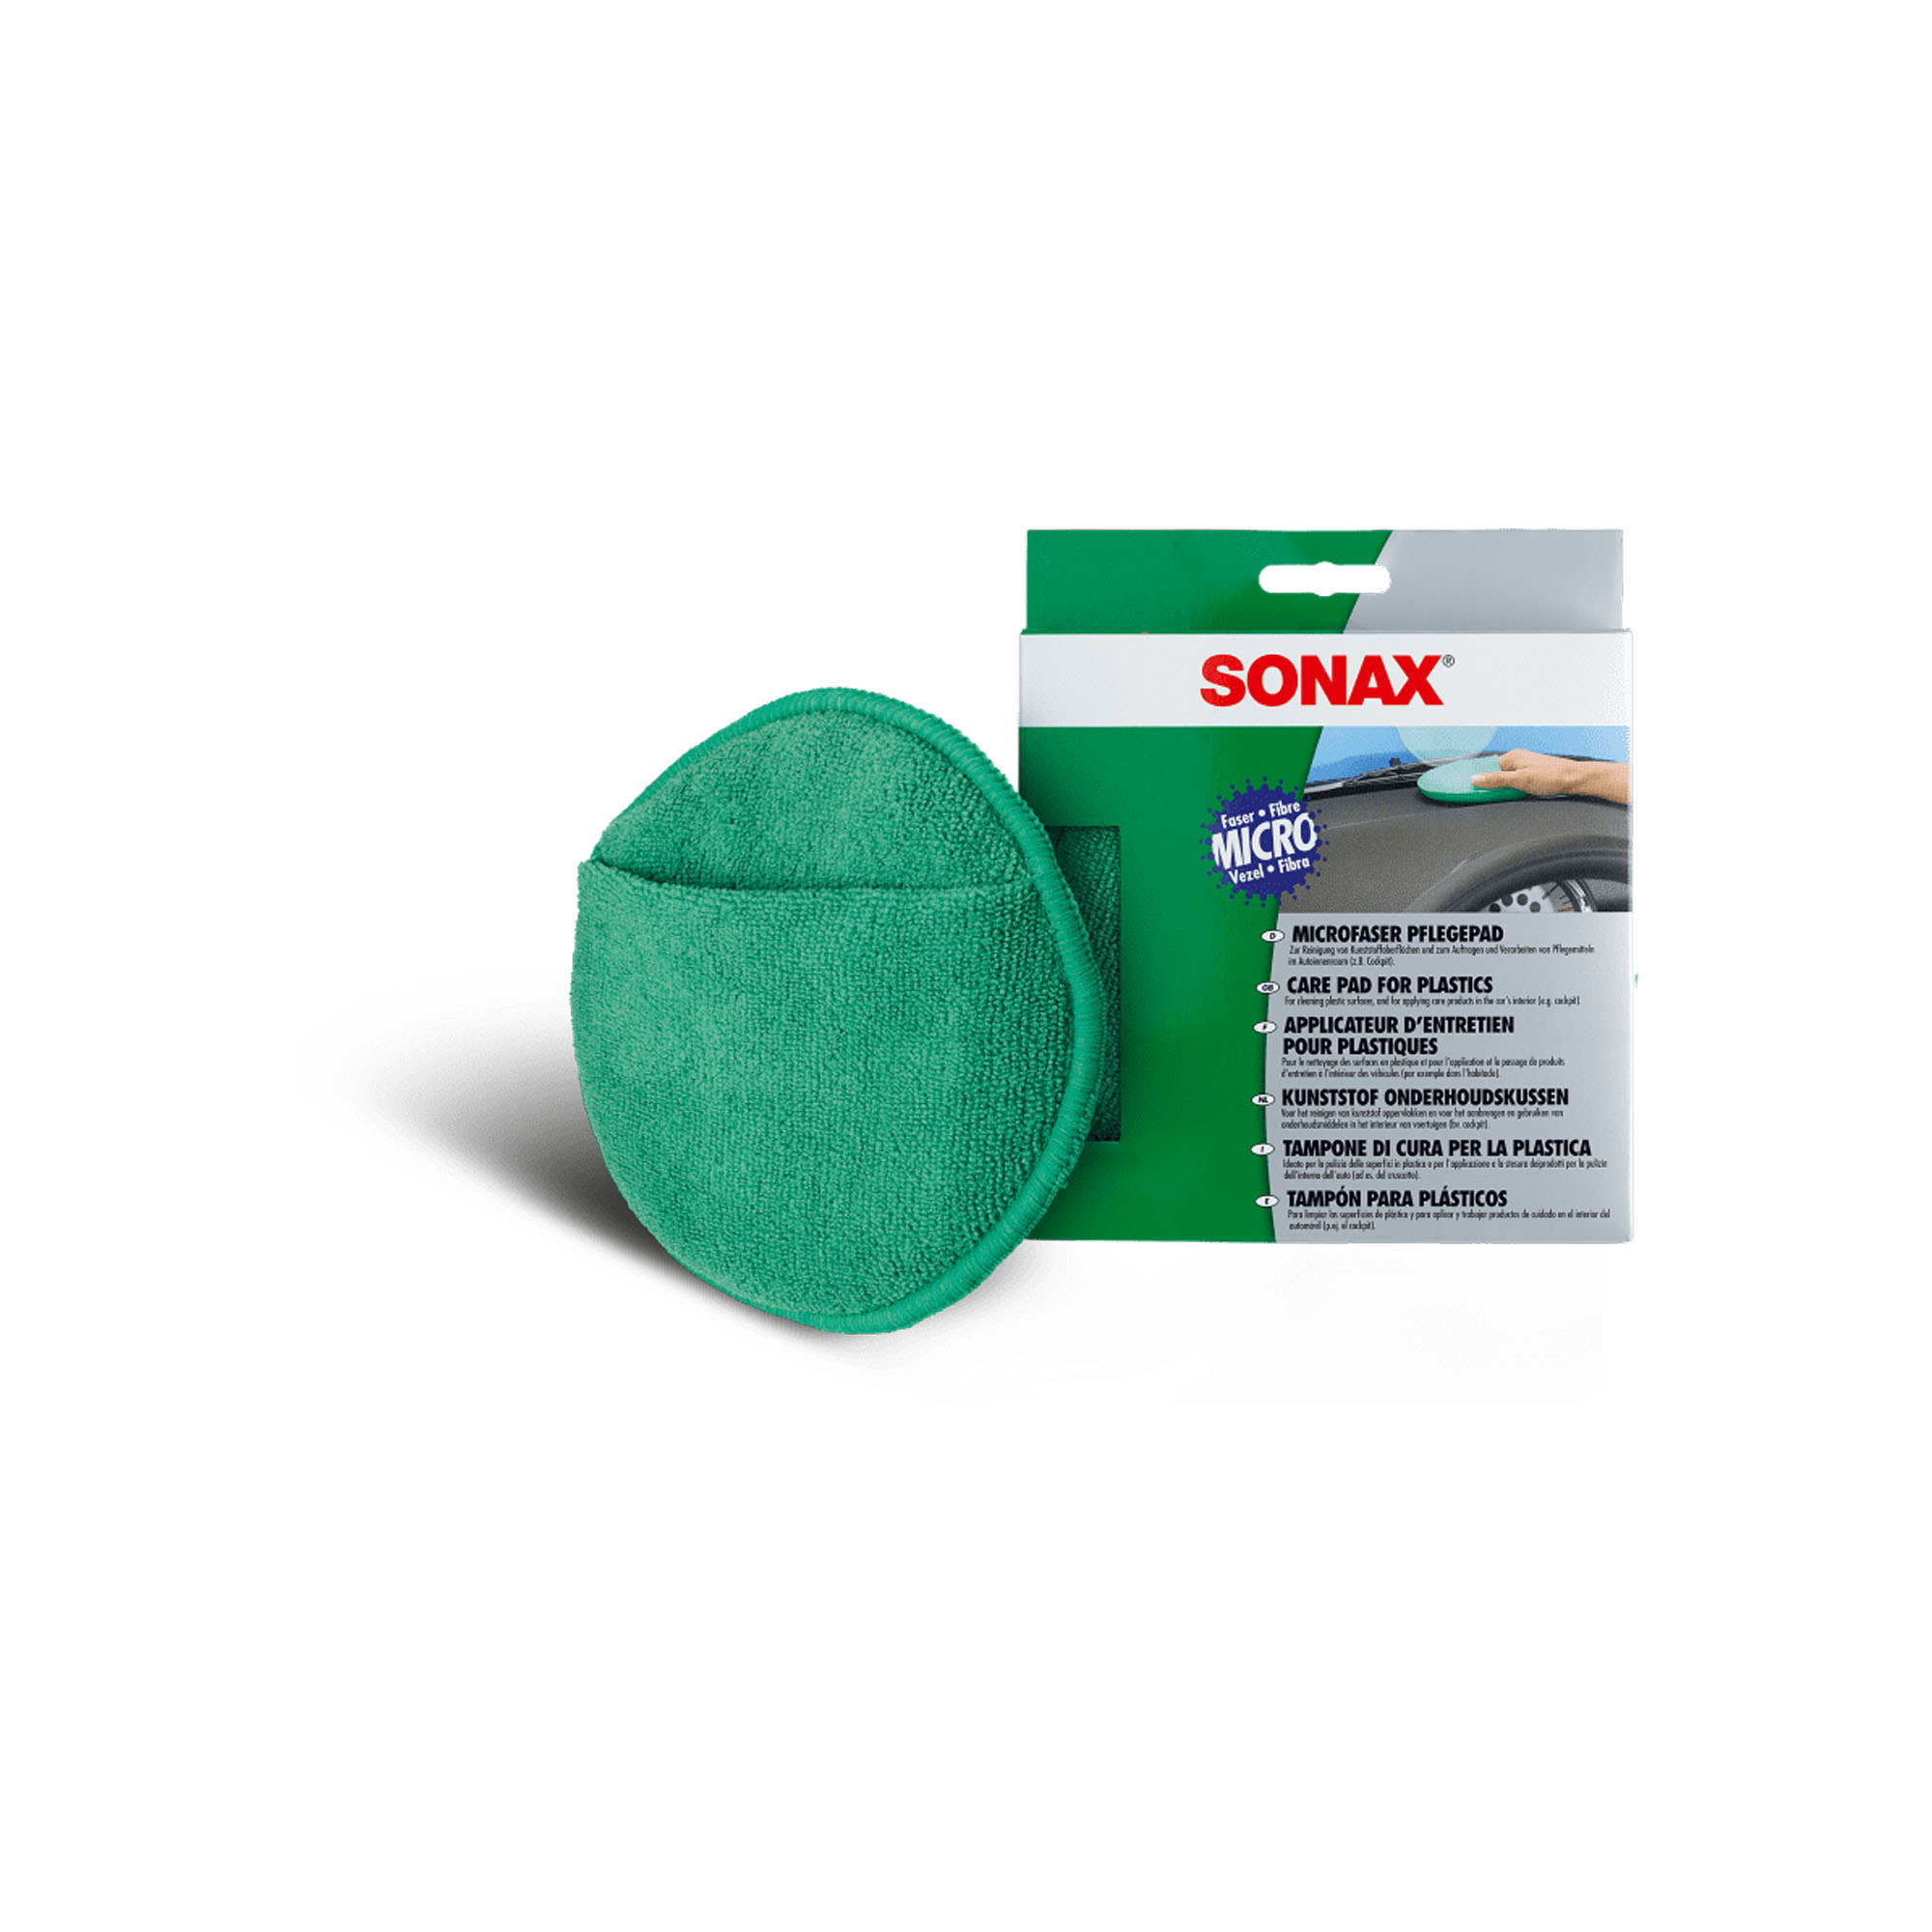 Sonax Plastic Care Cushion